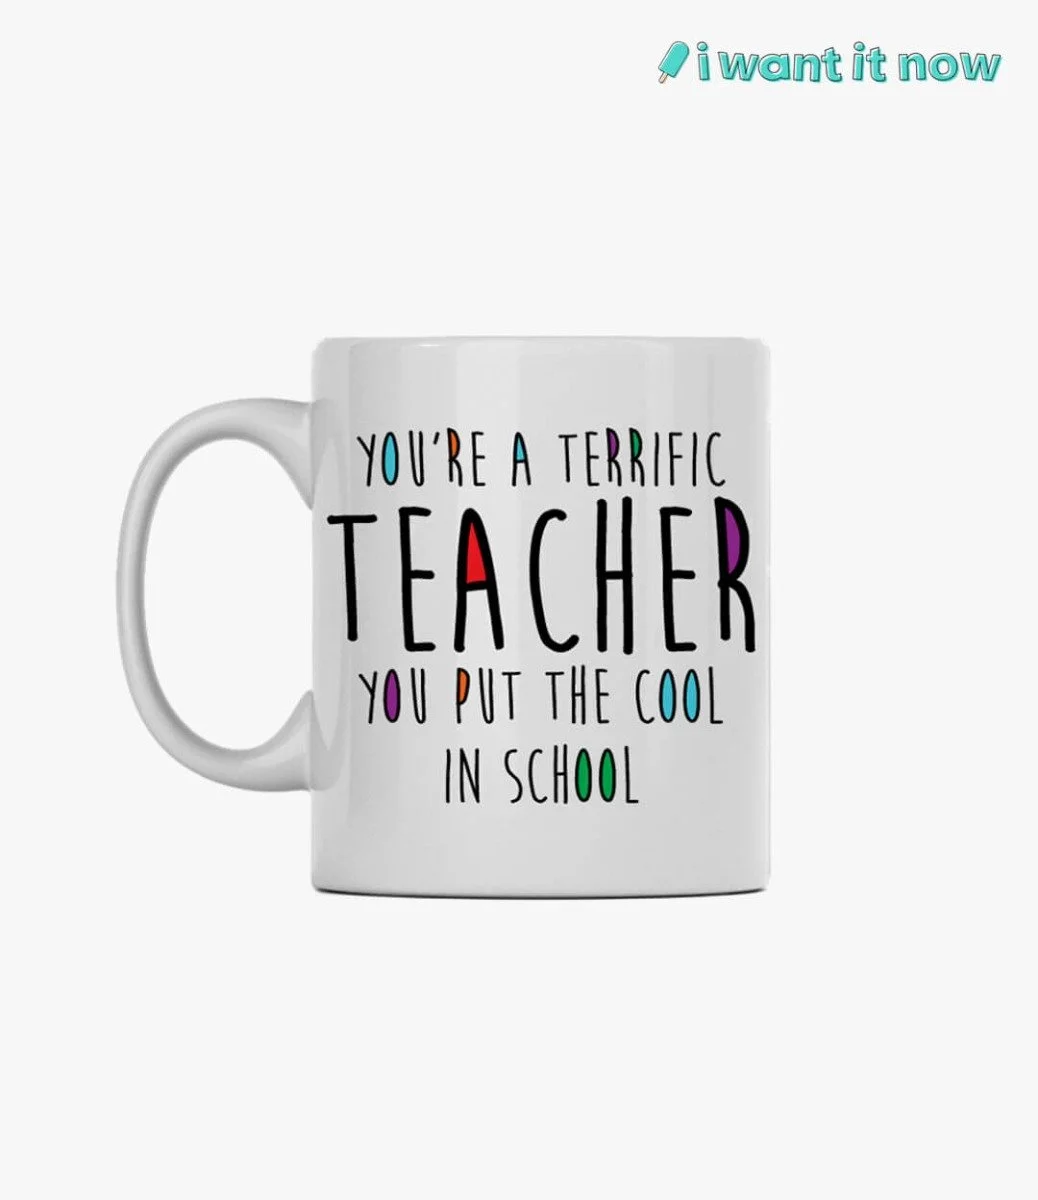 You're a terrific teacherMug By I Want It Now